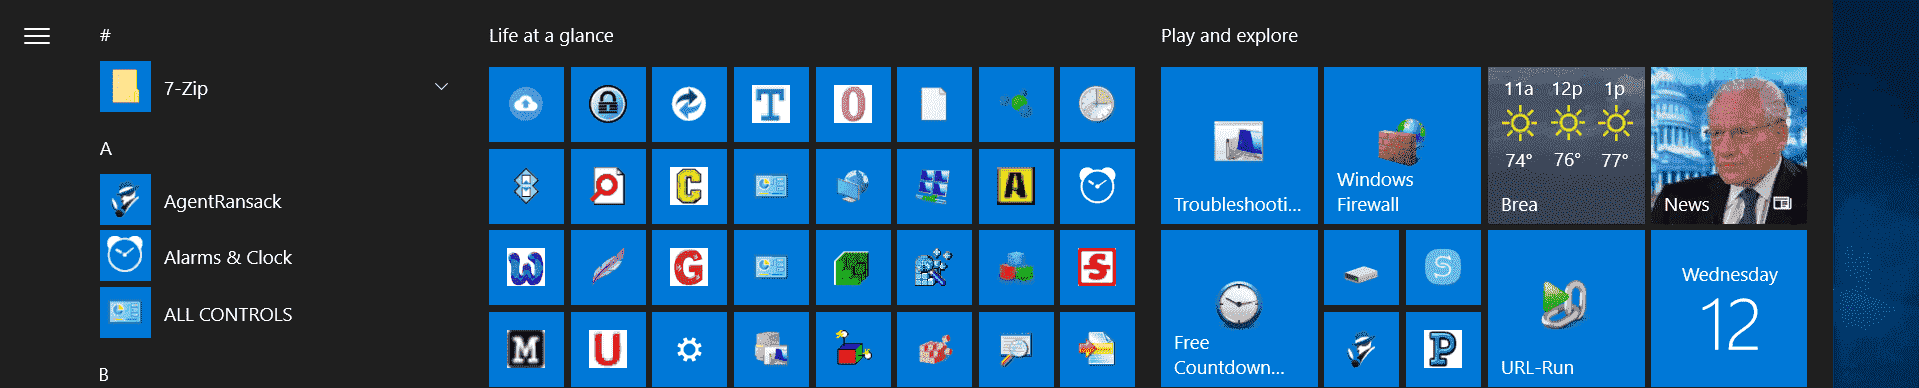 Windows 10 build 1803 Start menu "Show More Tiles" option broken a58f07dc-1dfb-481c-b8ff-cc94680ea0ab?upload=true.png